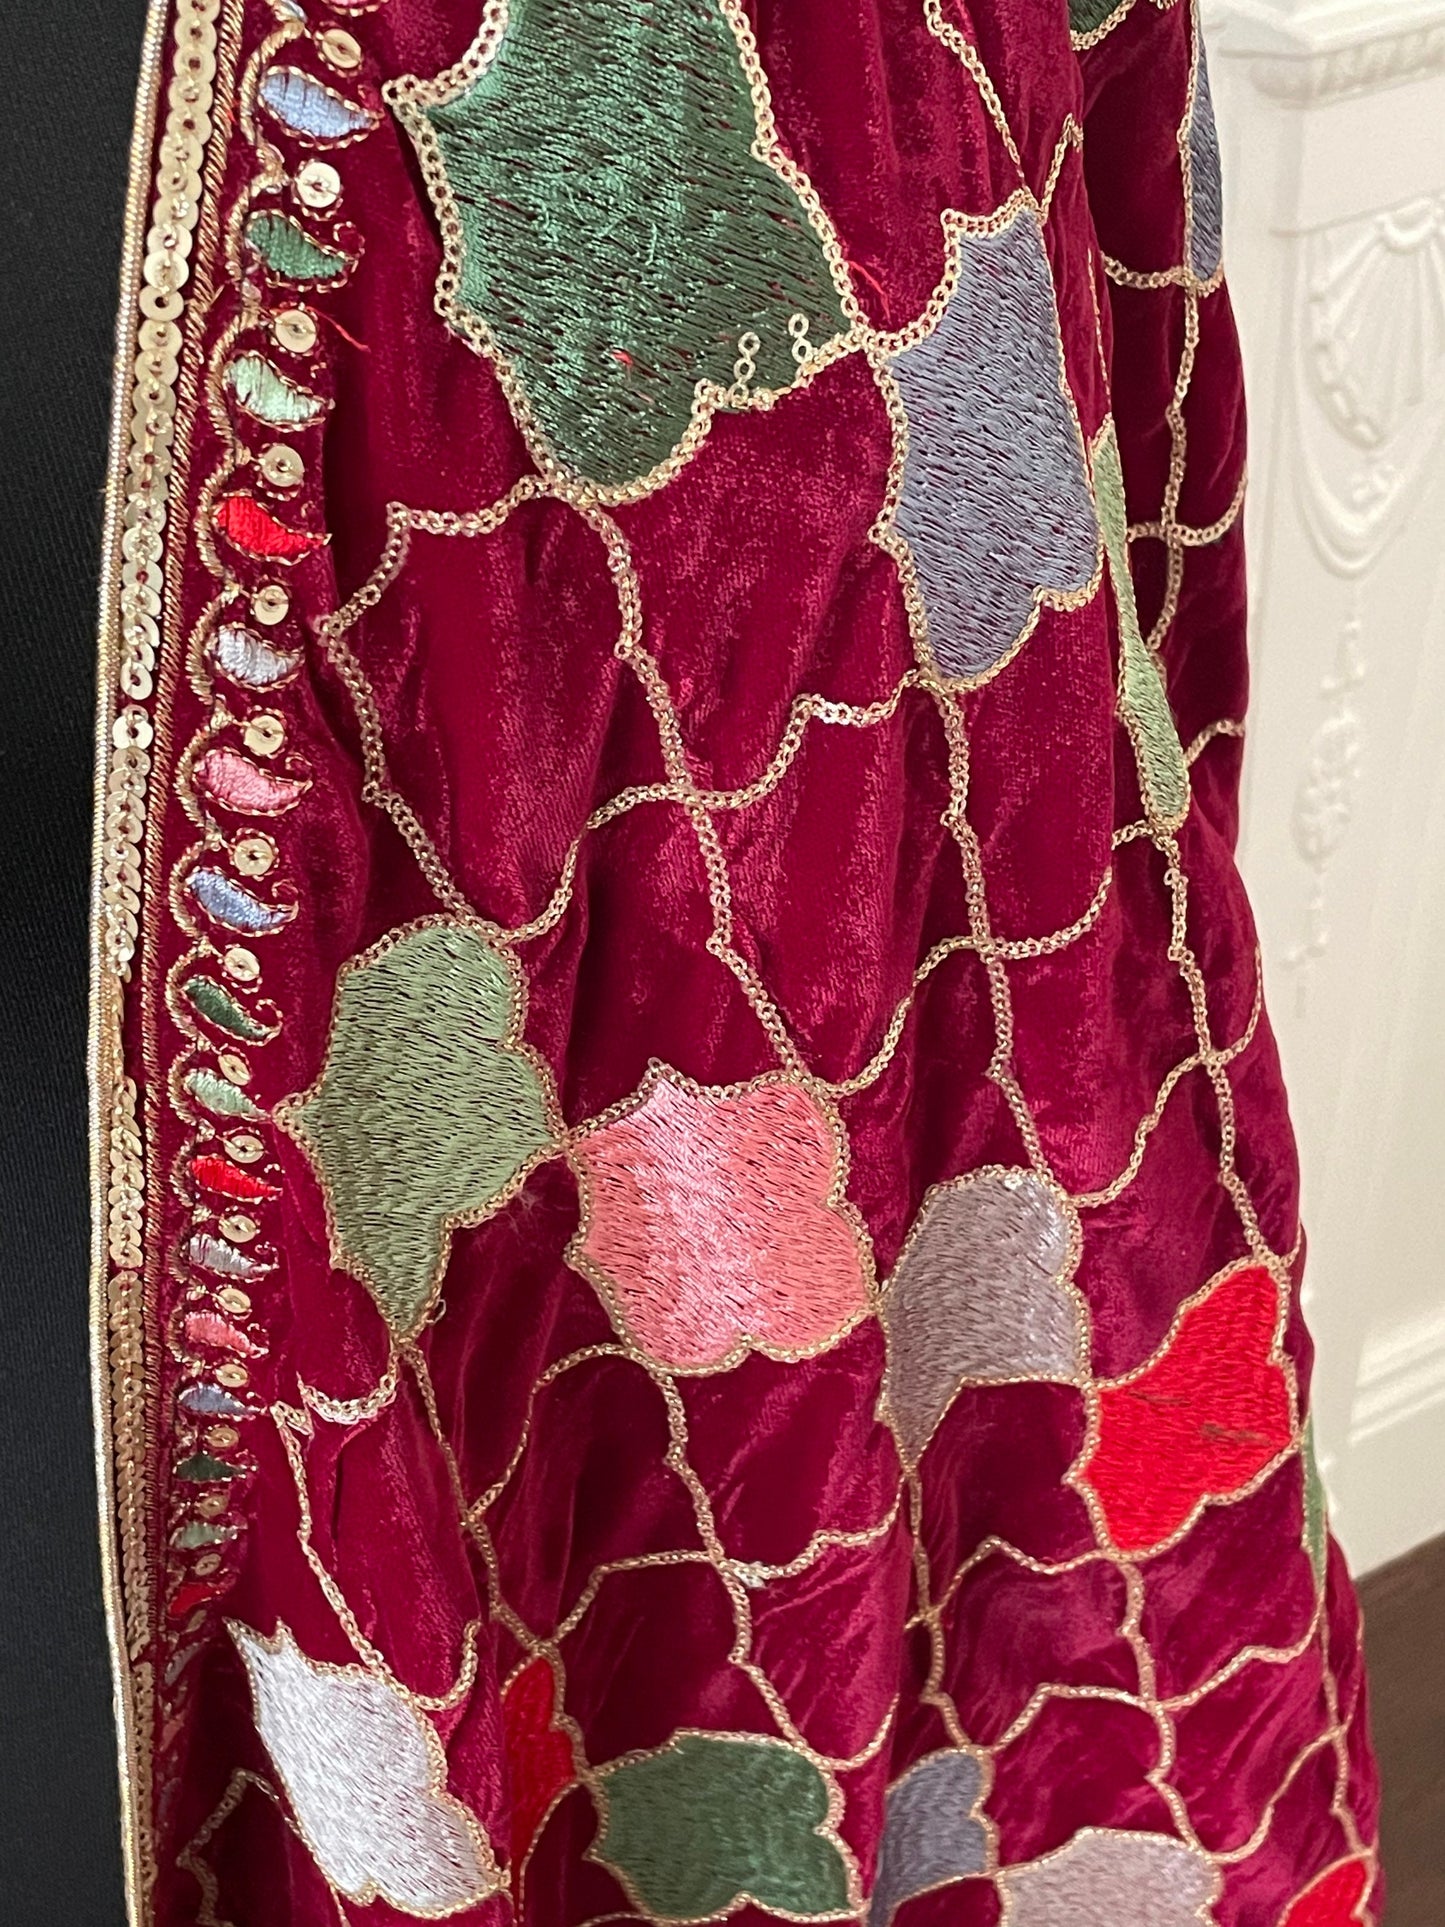 Velvet Embroidered Shawl Chaddar Duppattas for Winters Weddings Lohri dressing update Salwar Kameez Lehengas Kurtis